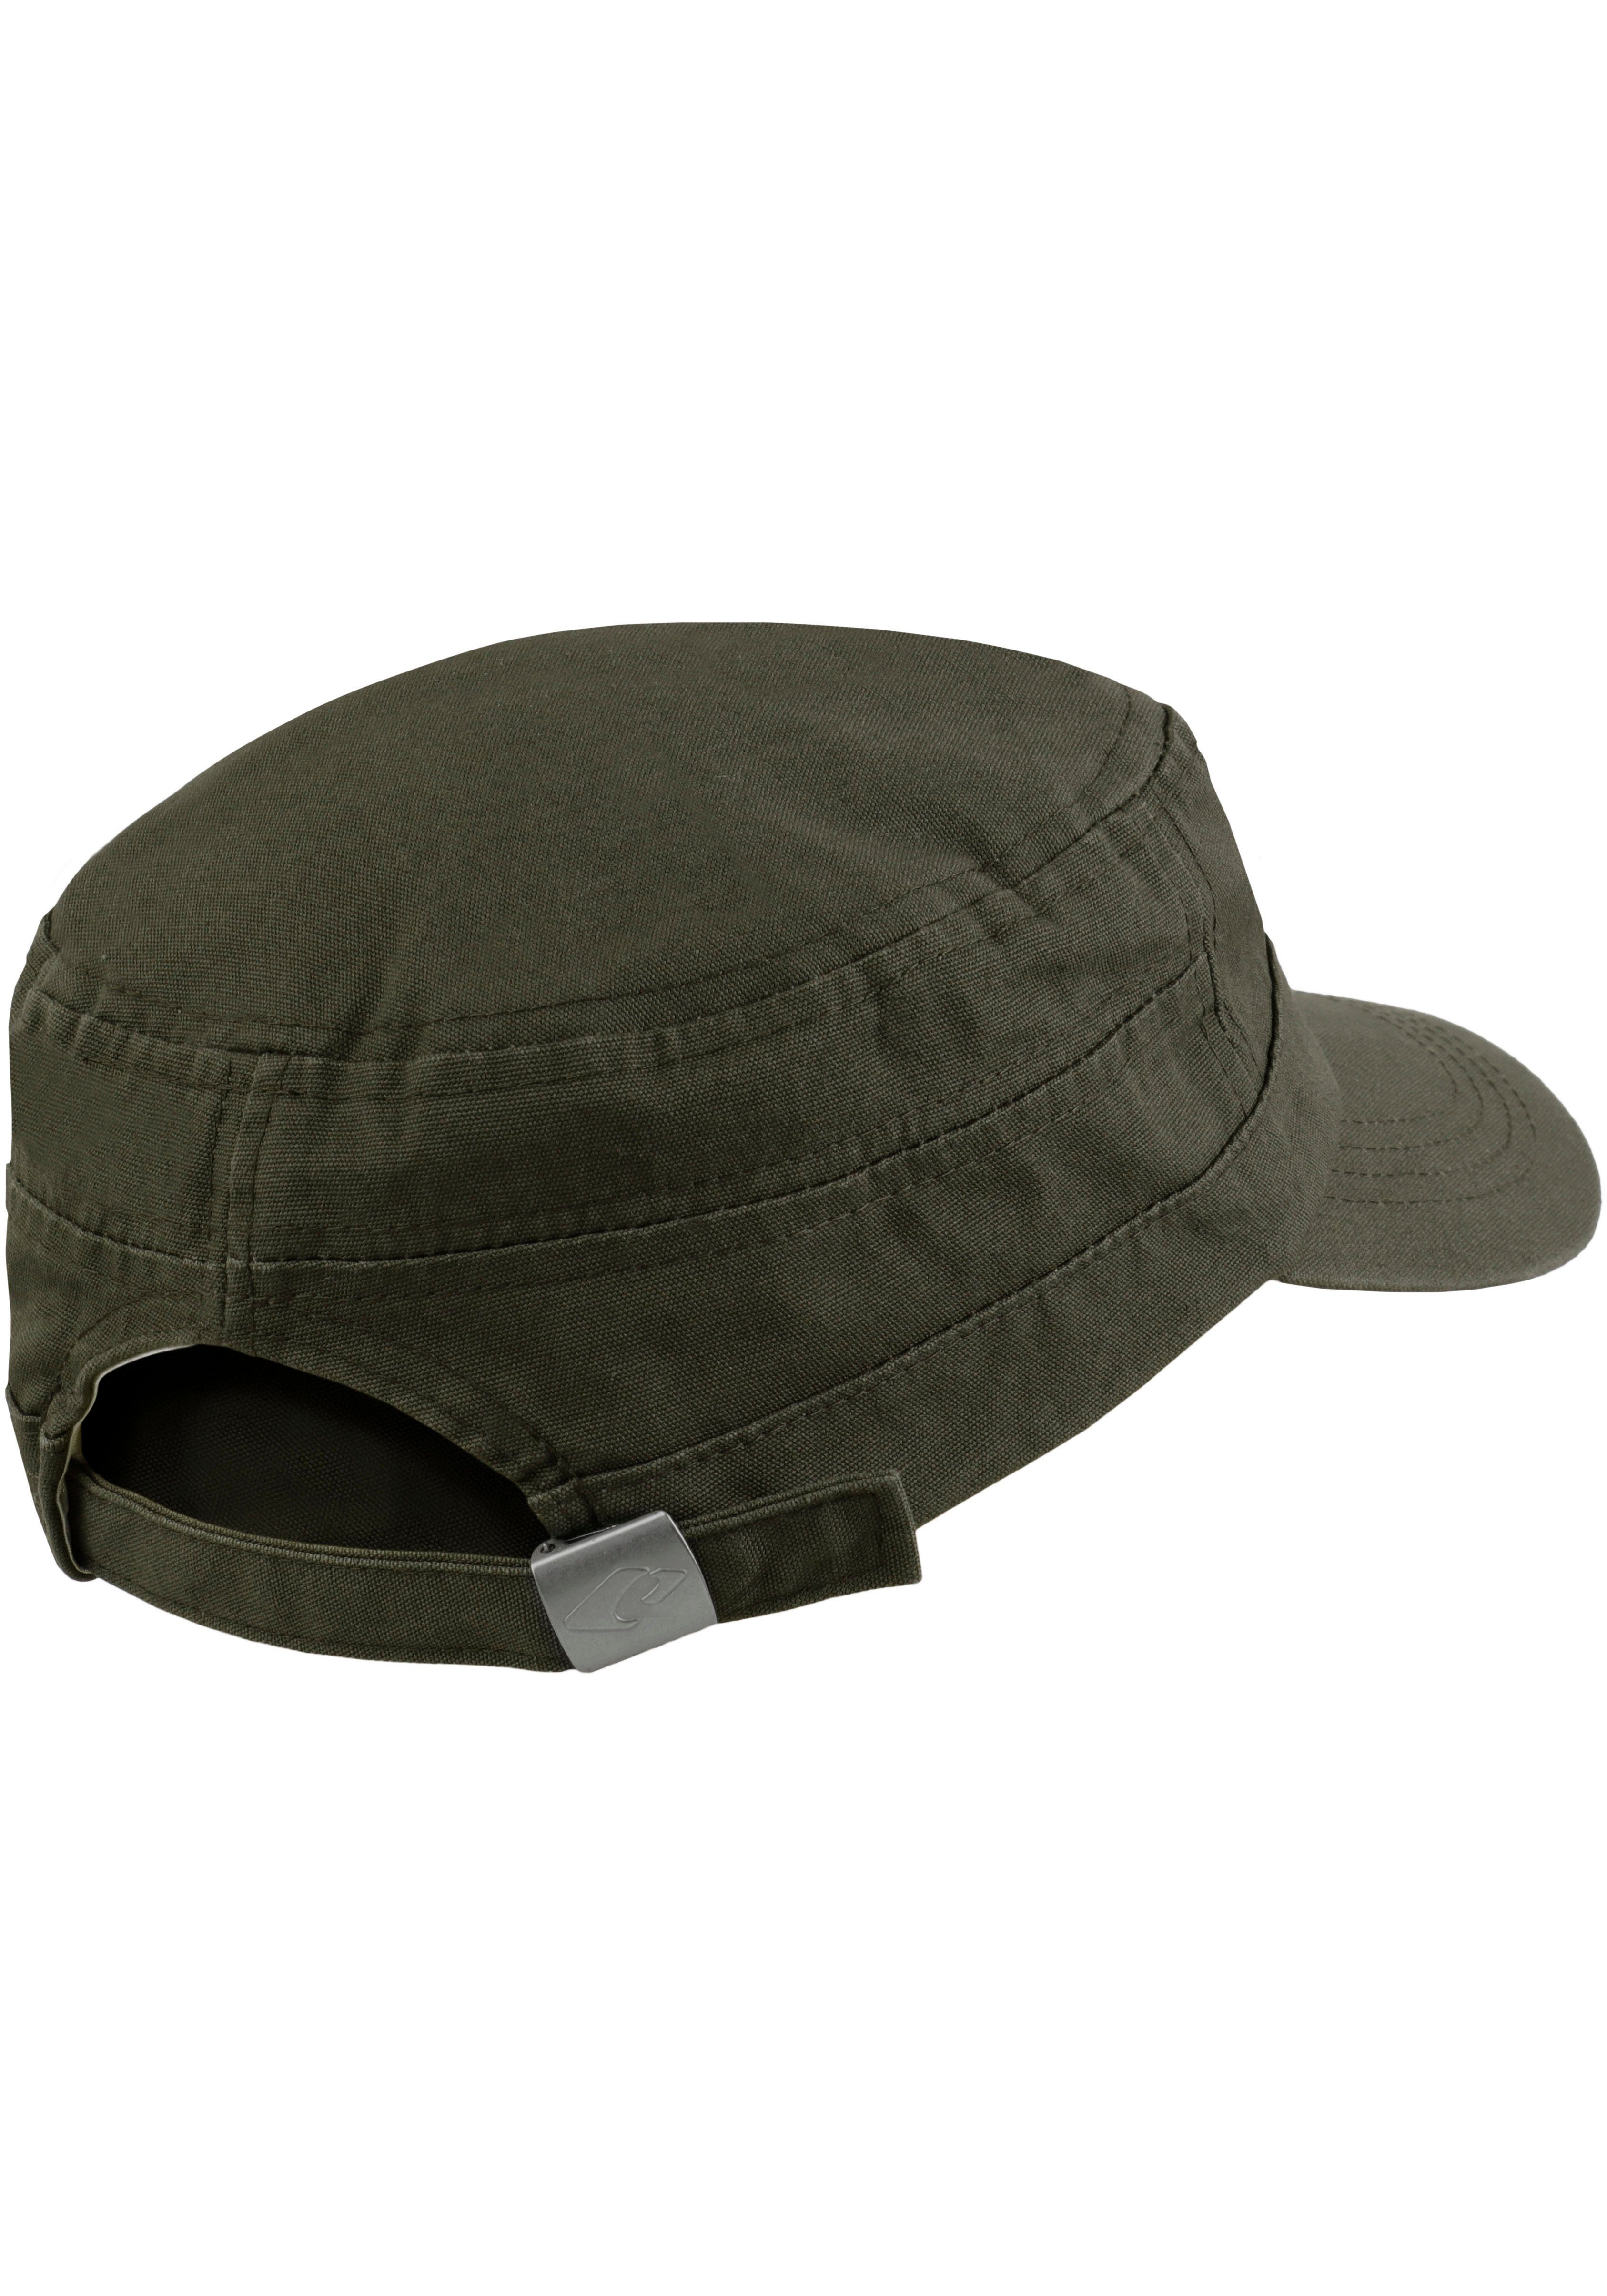 aus One chillouts Paso Baumwolle, Cap atmungsaktiv, olivgrün Size reiner El Army Hat